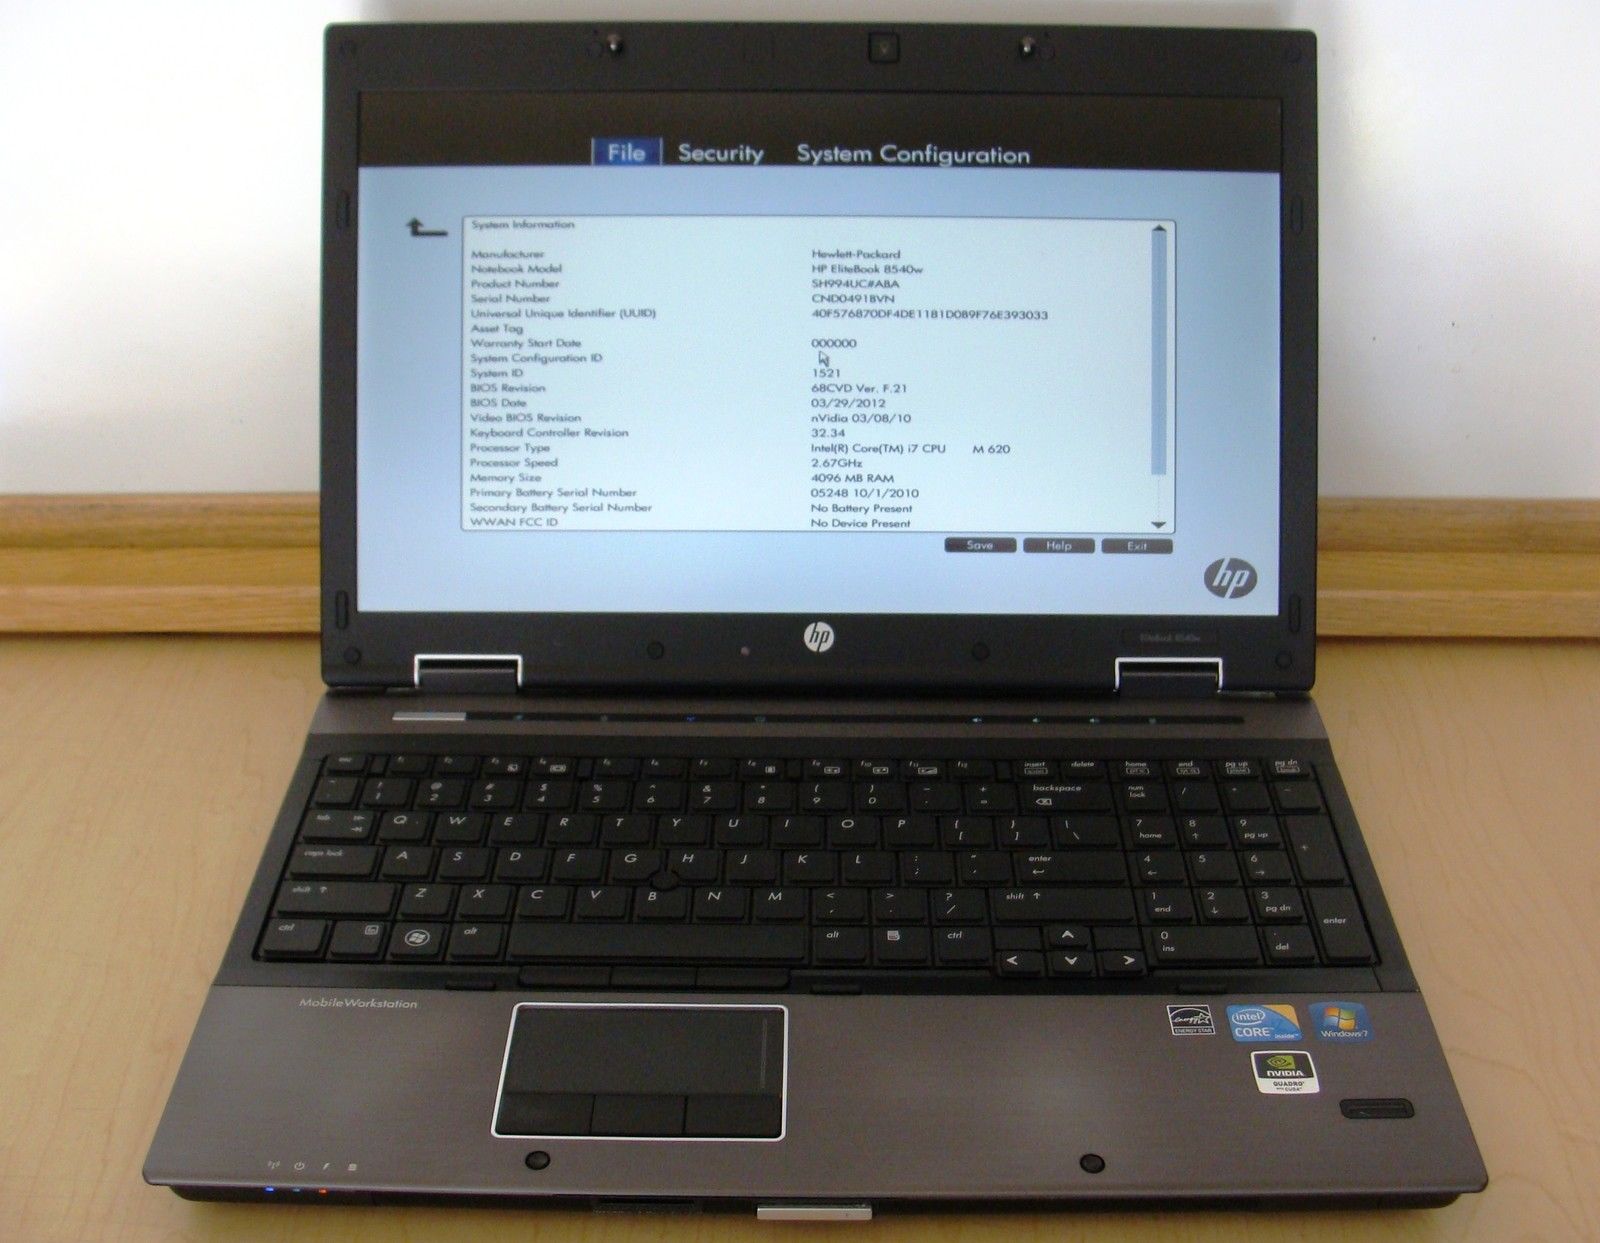 HP Elitebook 8540W (Core i7-720QM, 4GB, 250GB, VGA 1GB NVidia Quadro FX 880M, 15.6 inch)